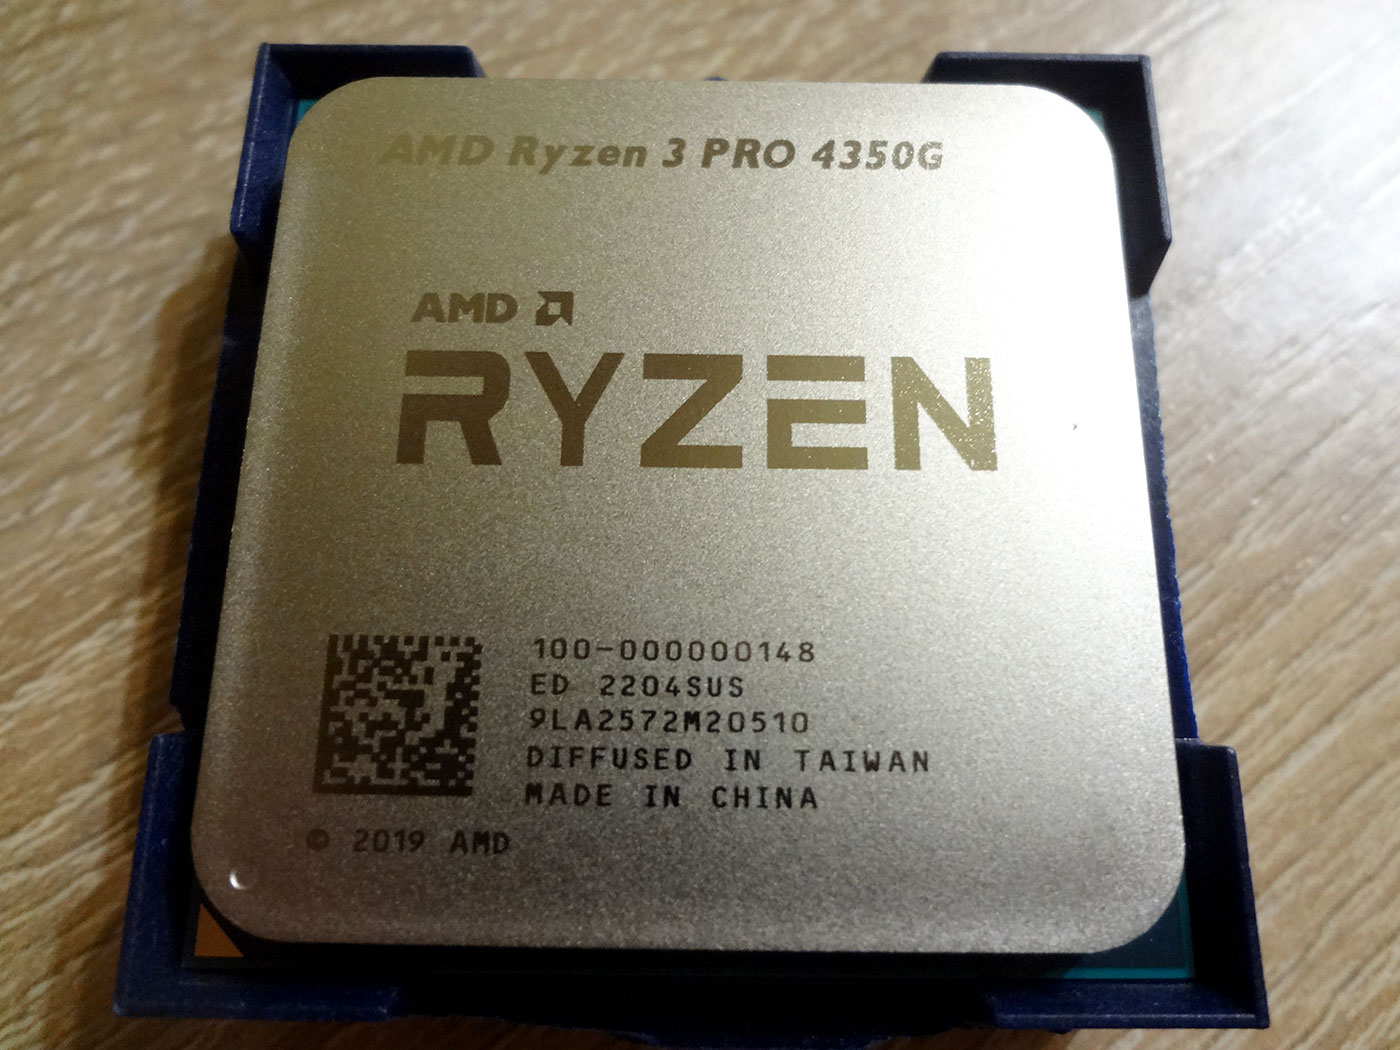 Ryzen 3 pro 4350g. AMD Ryzen 3 Pro 4350g am4, 4 x 3800 МГЦ. Ryzen 3 4350g Pro в 3d. Процессор AMD. AMD Ryzen 3 Pro 4350g OEM (С кулером).